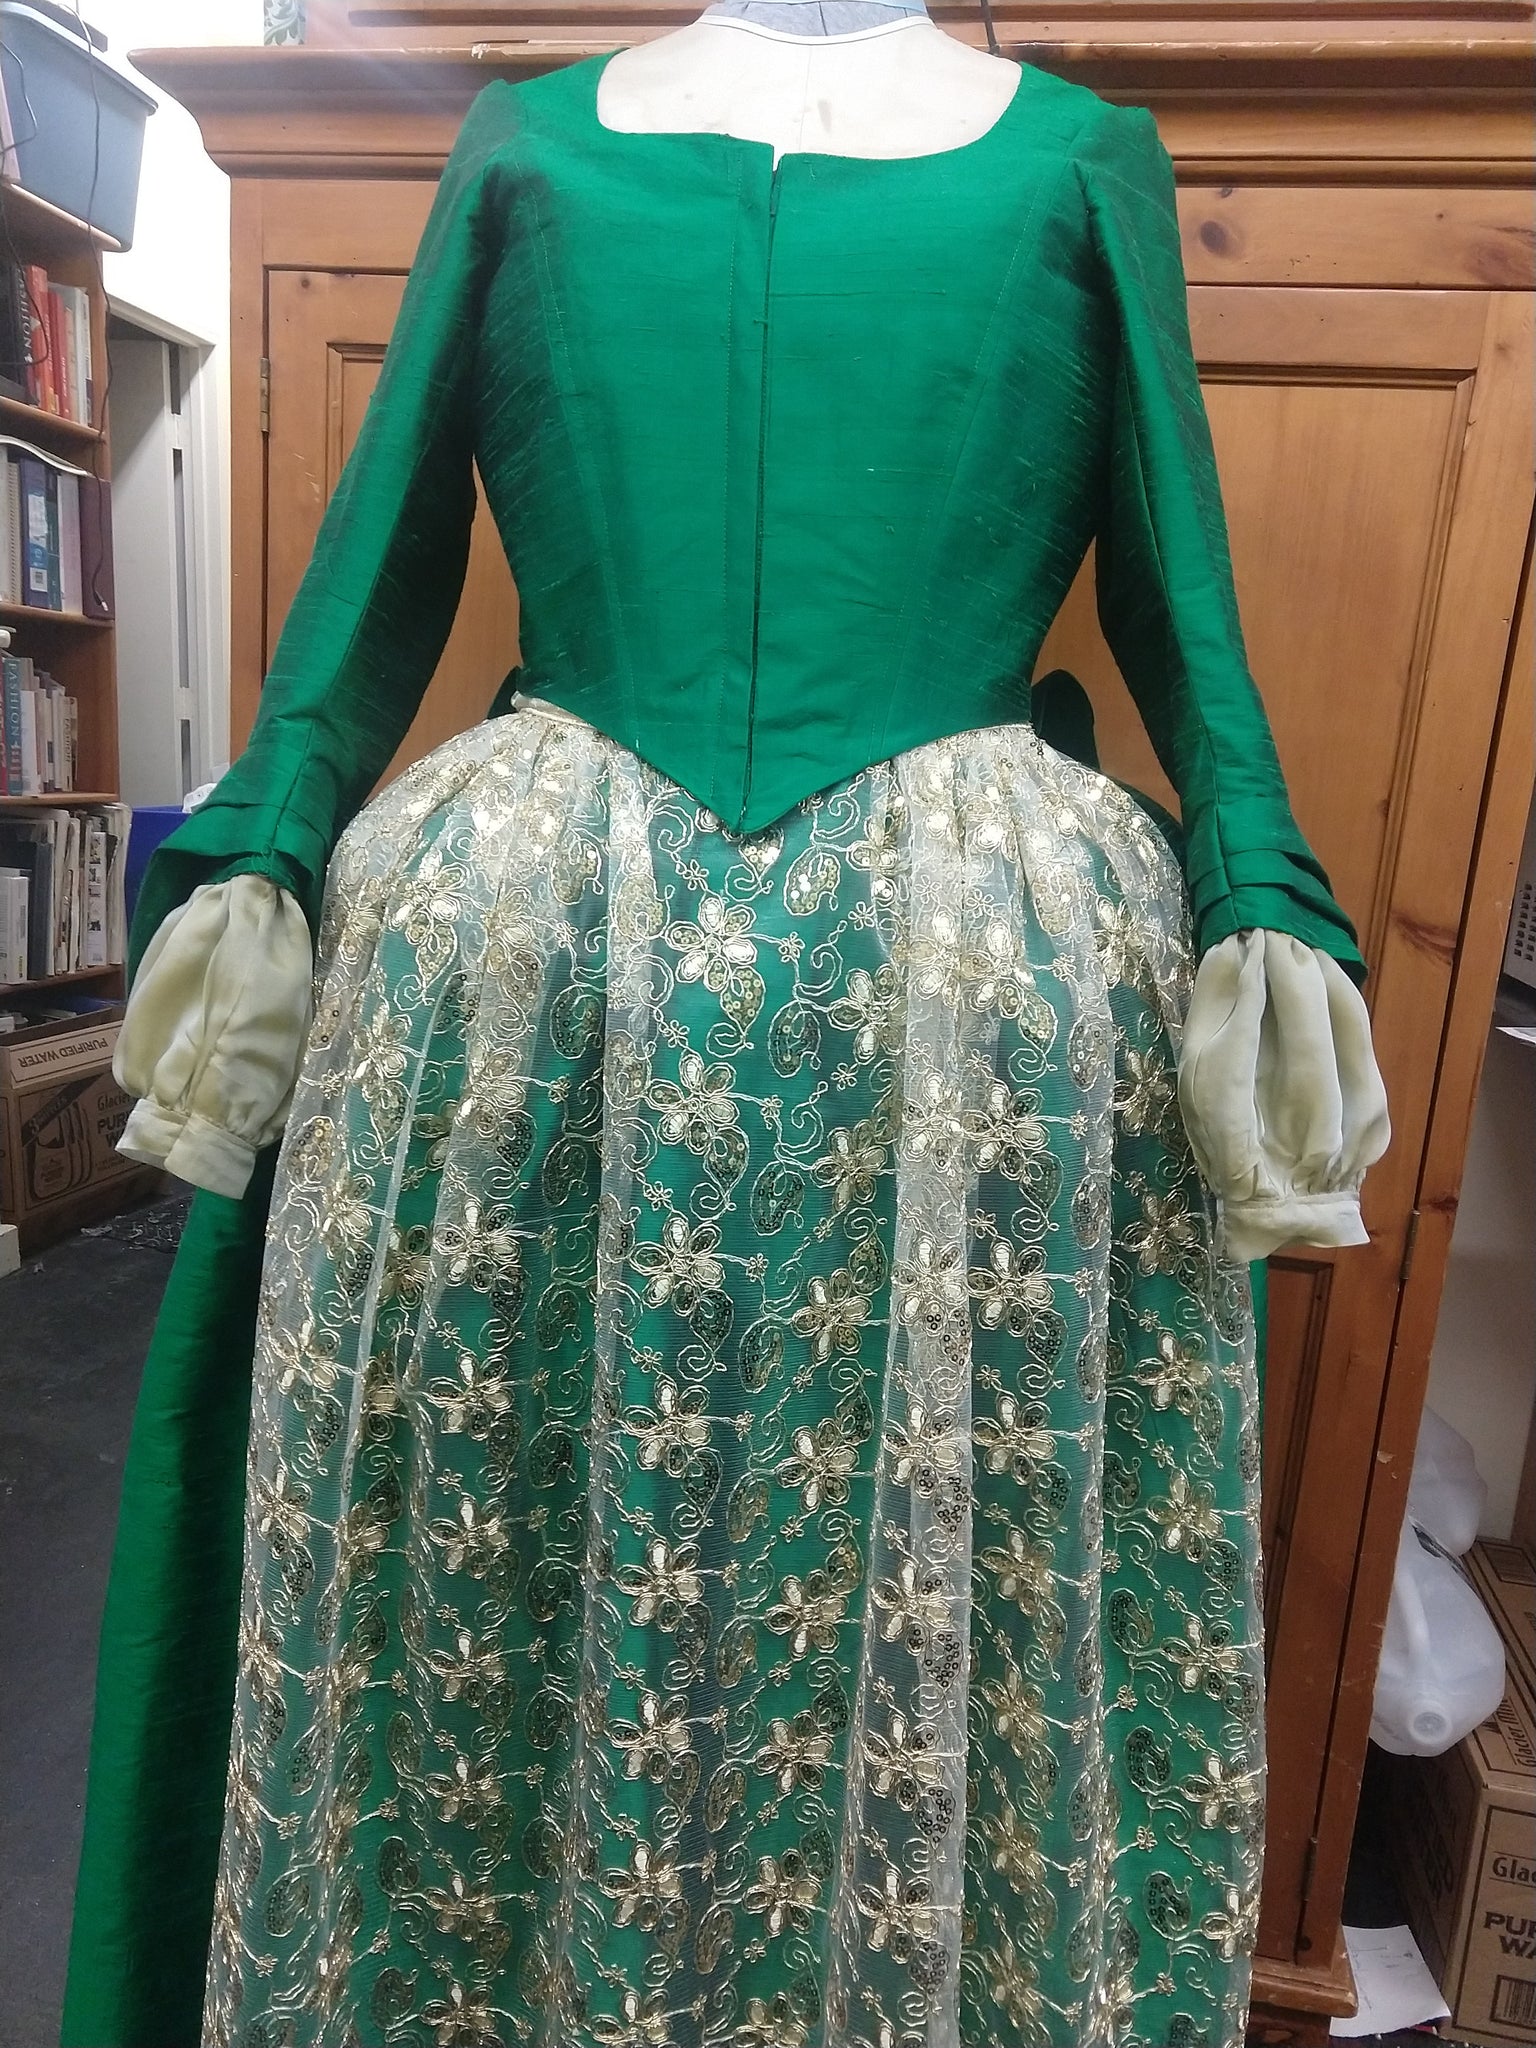 18th century dress with apron Chocolate girl